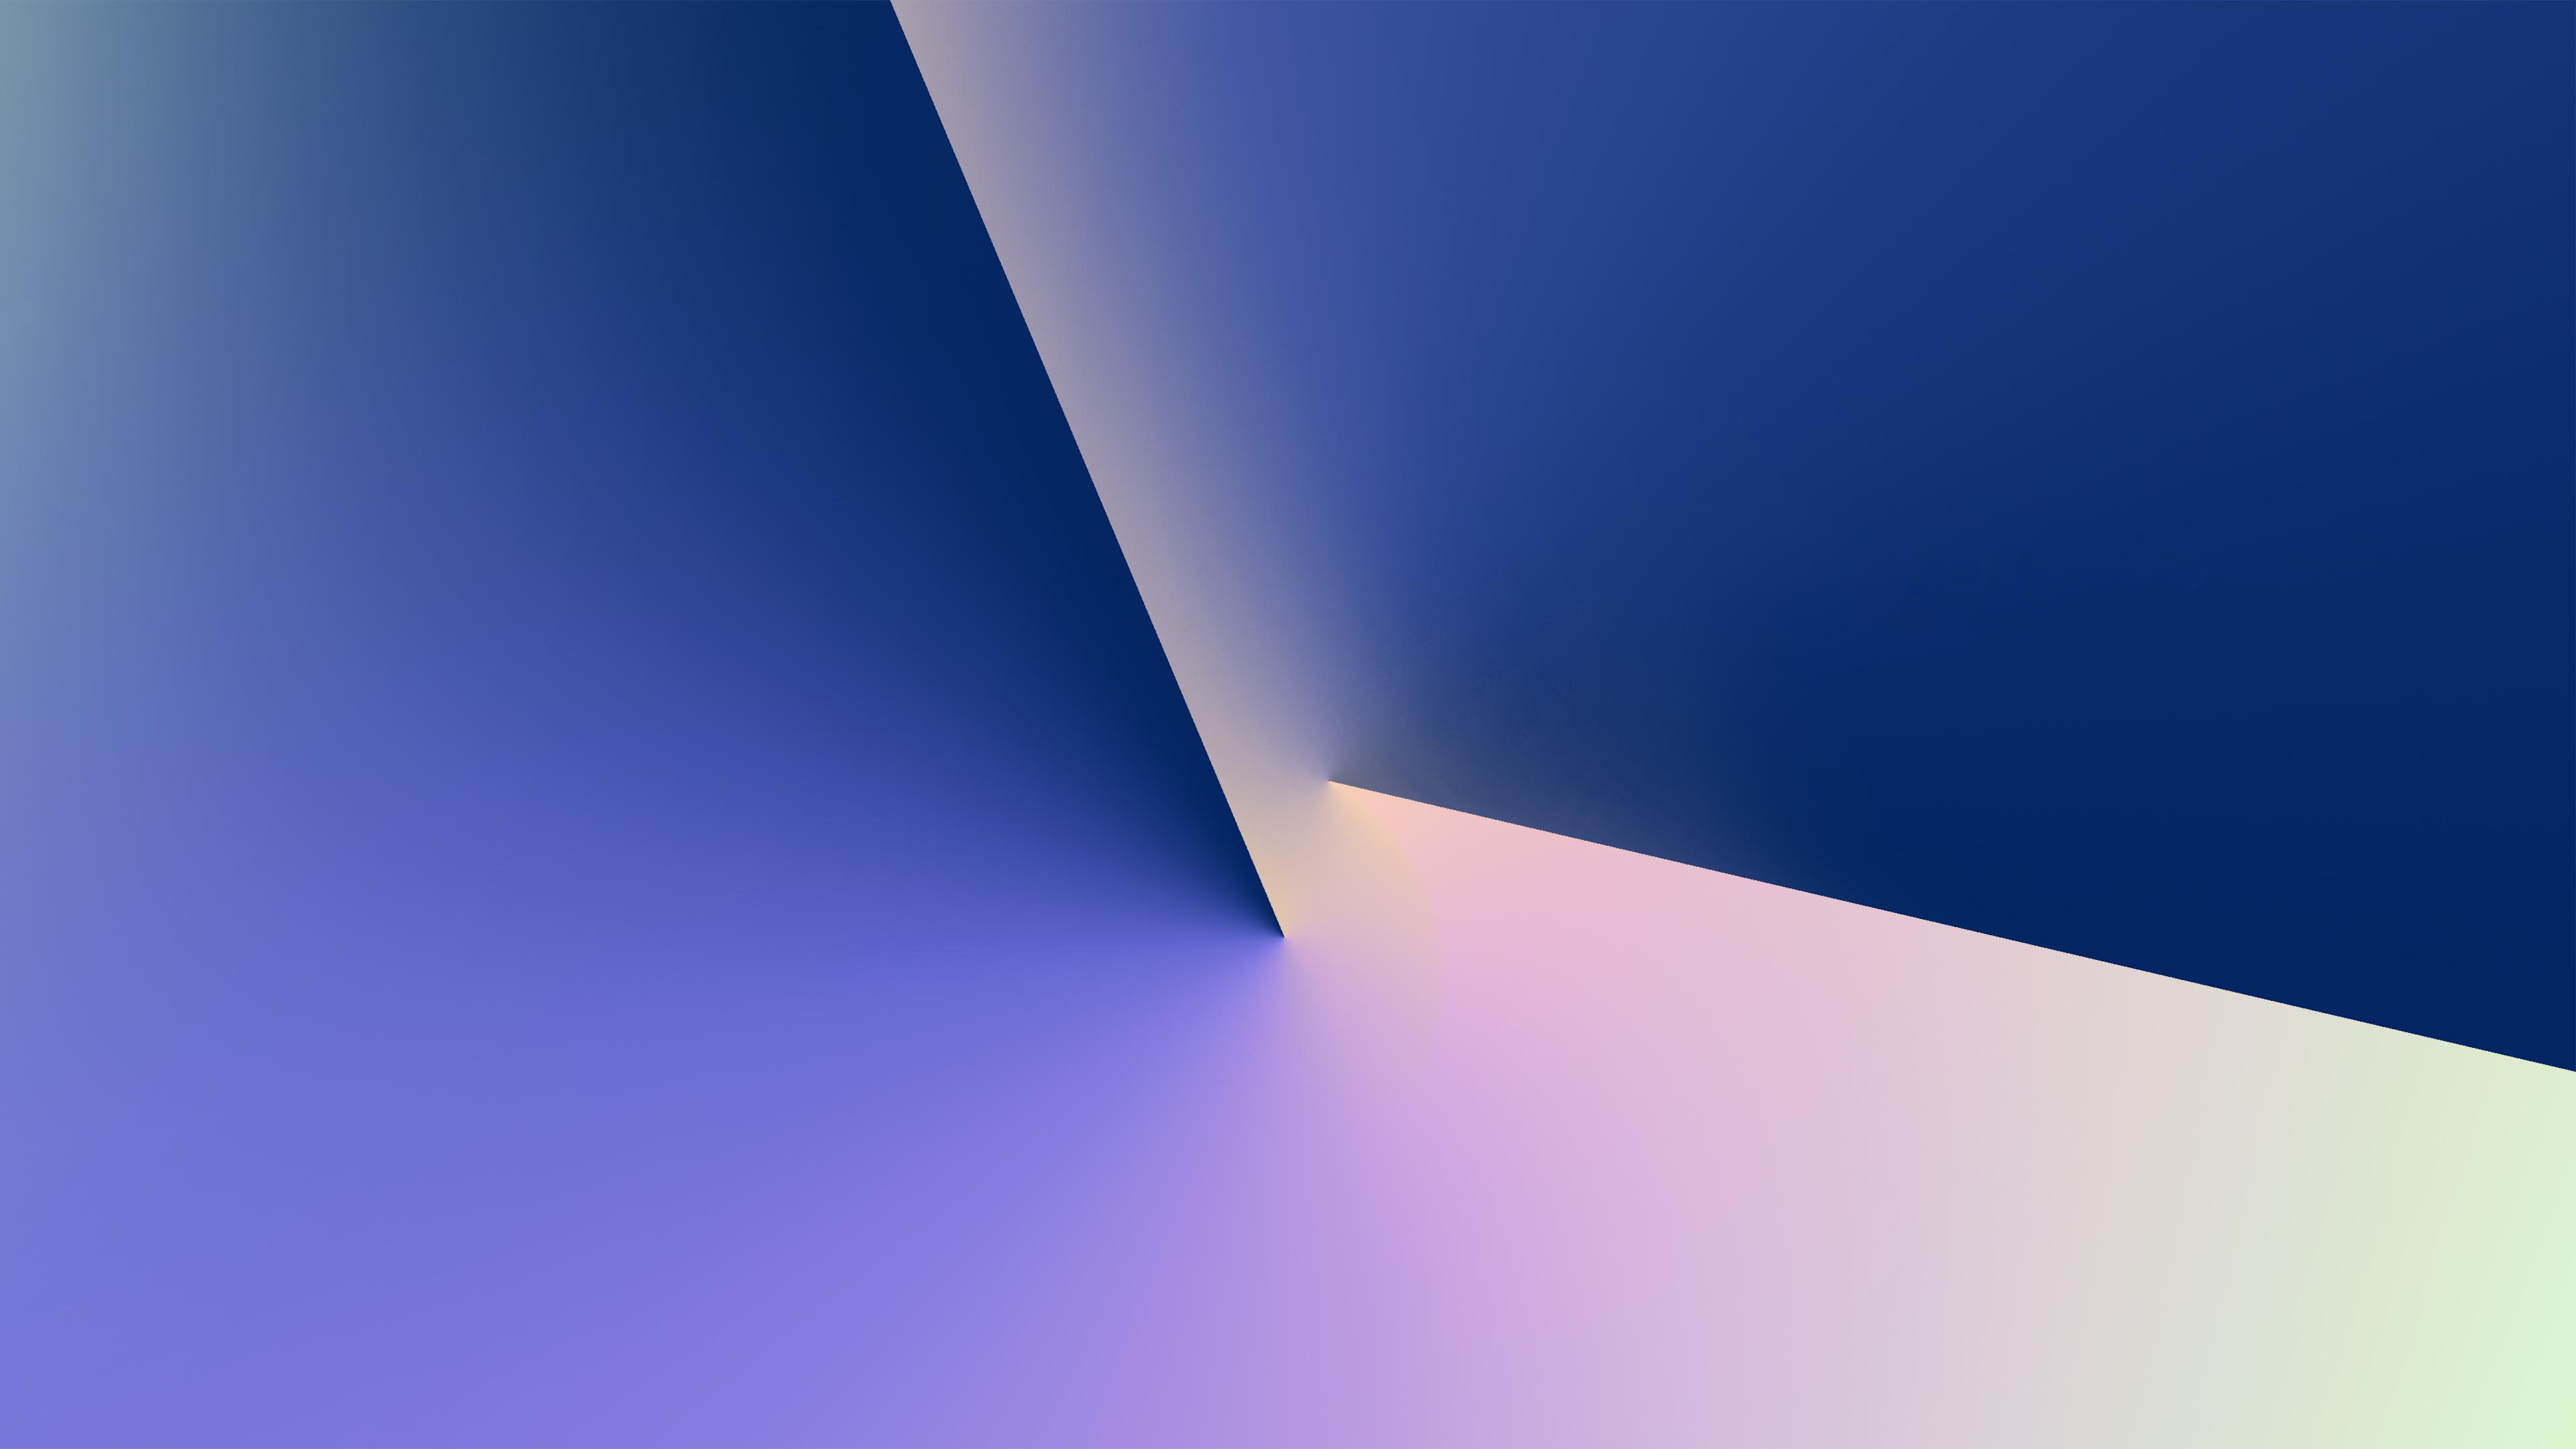 General 3840x2160 gradient ASUS simple background digital art minimalism colorful blue